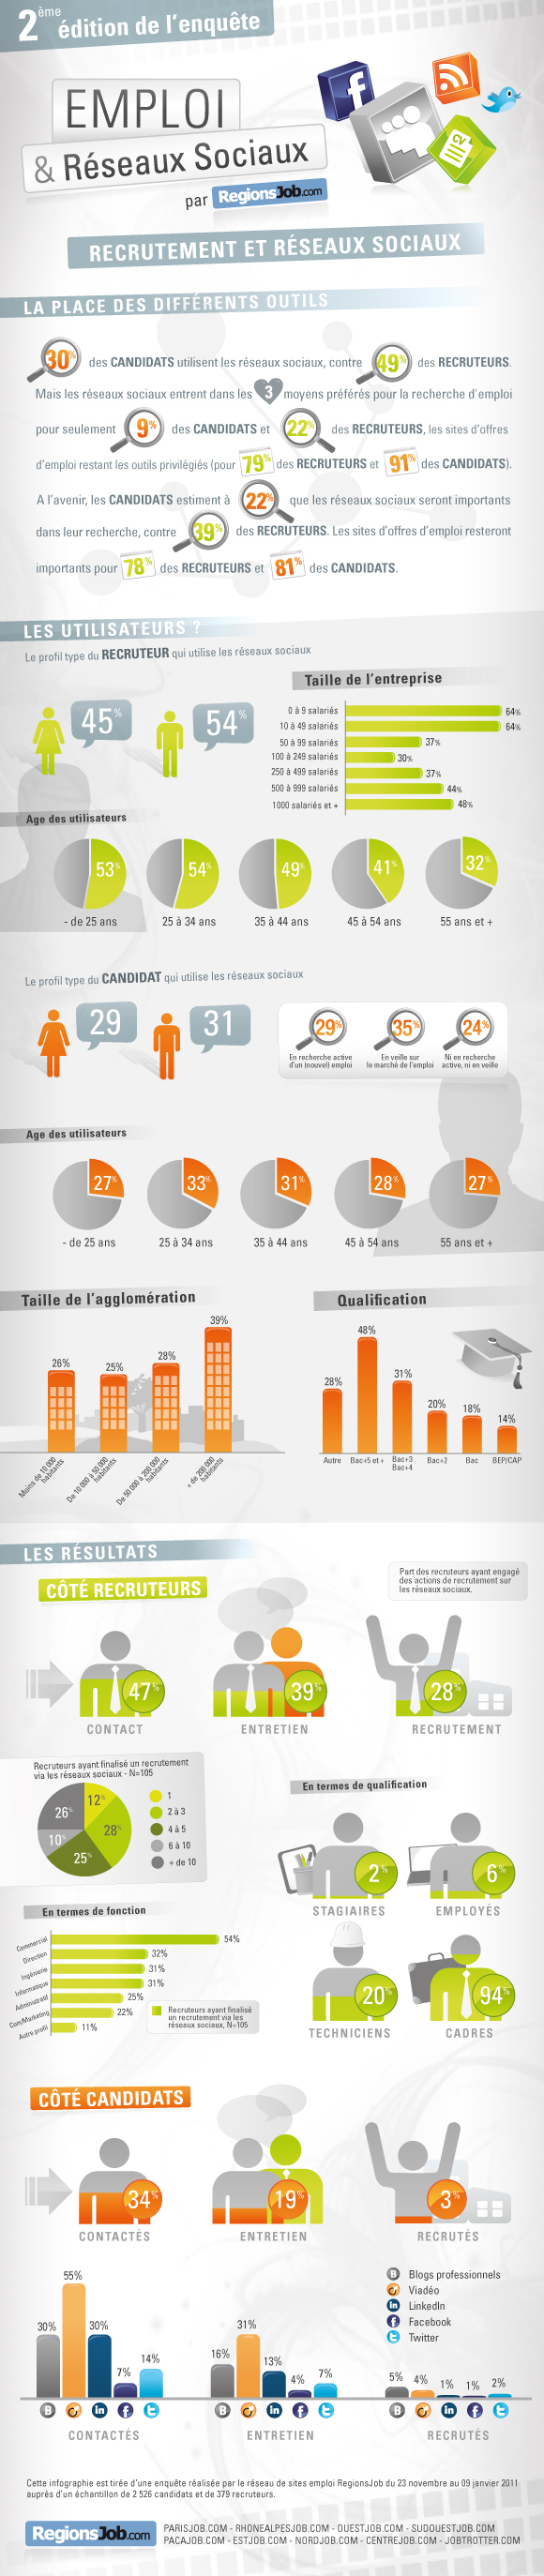 infographie recrutement et RS 2013